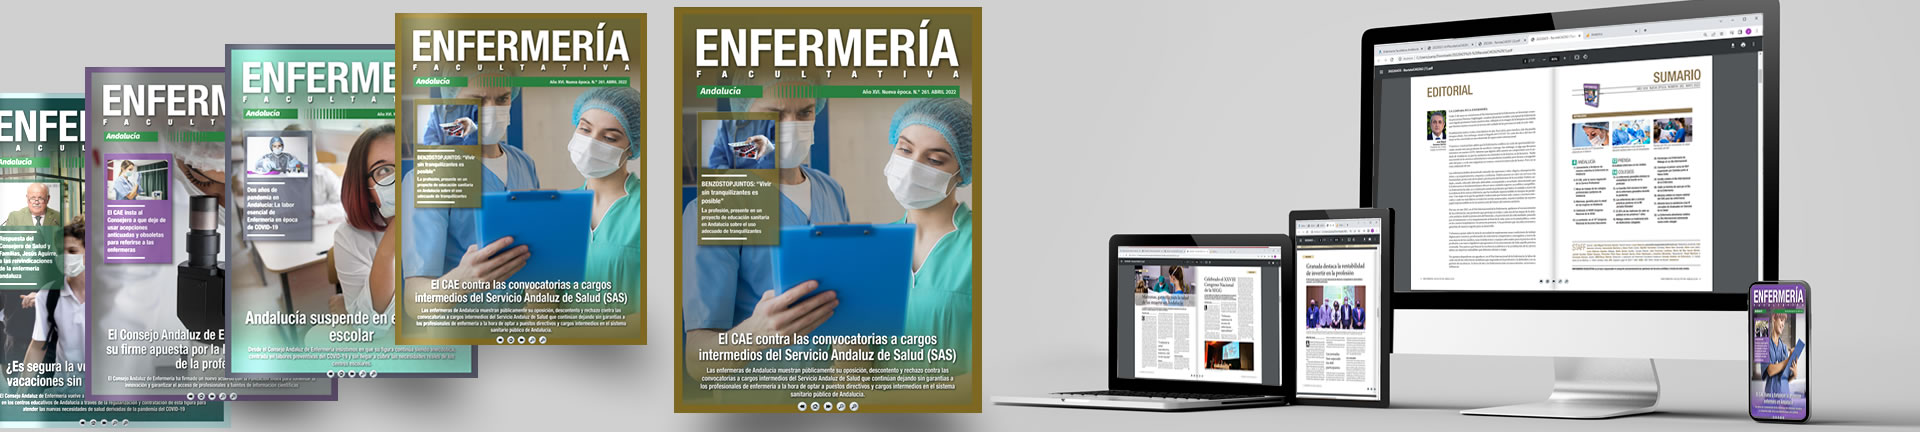 Consejo Andaluz de Colegios de Enfermería - CAE - Revista Enfermería Facultativa número 261 - Edición Andalucía